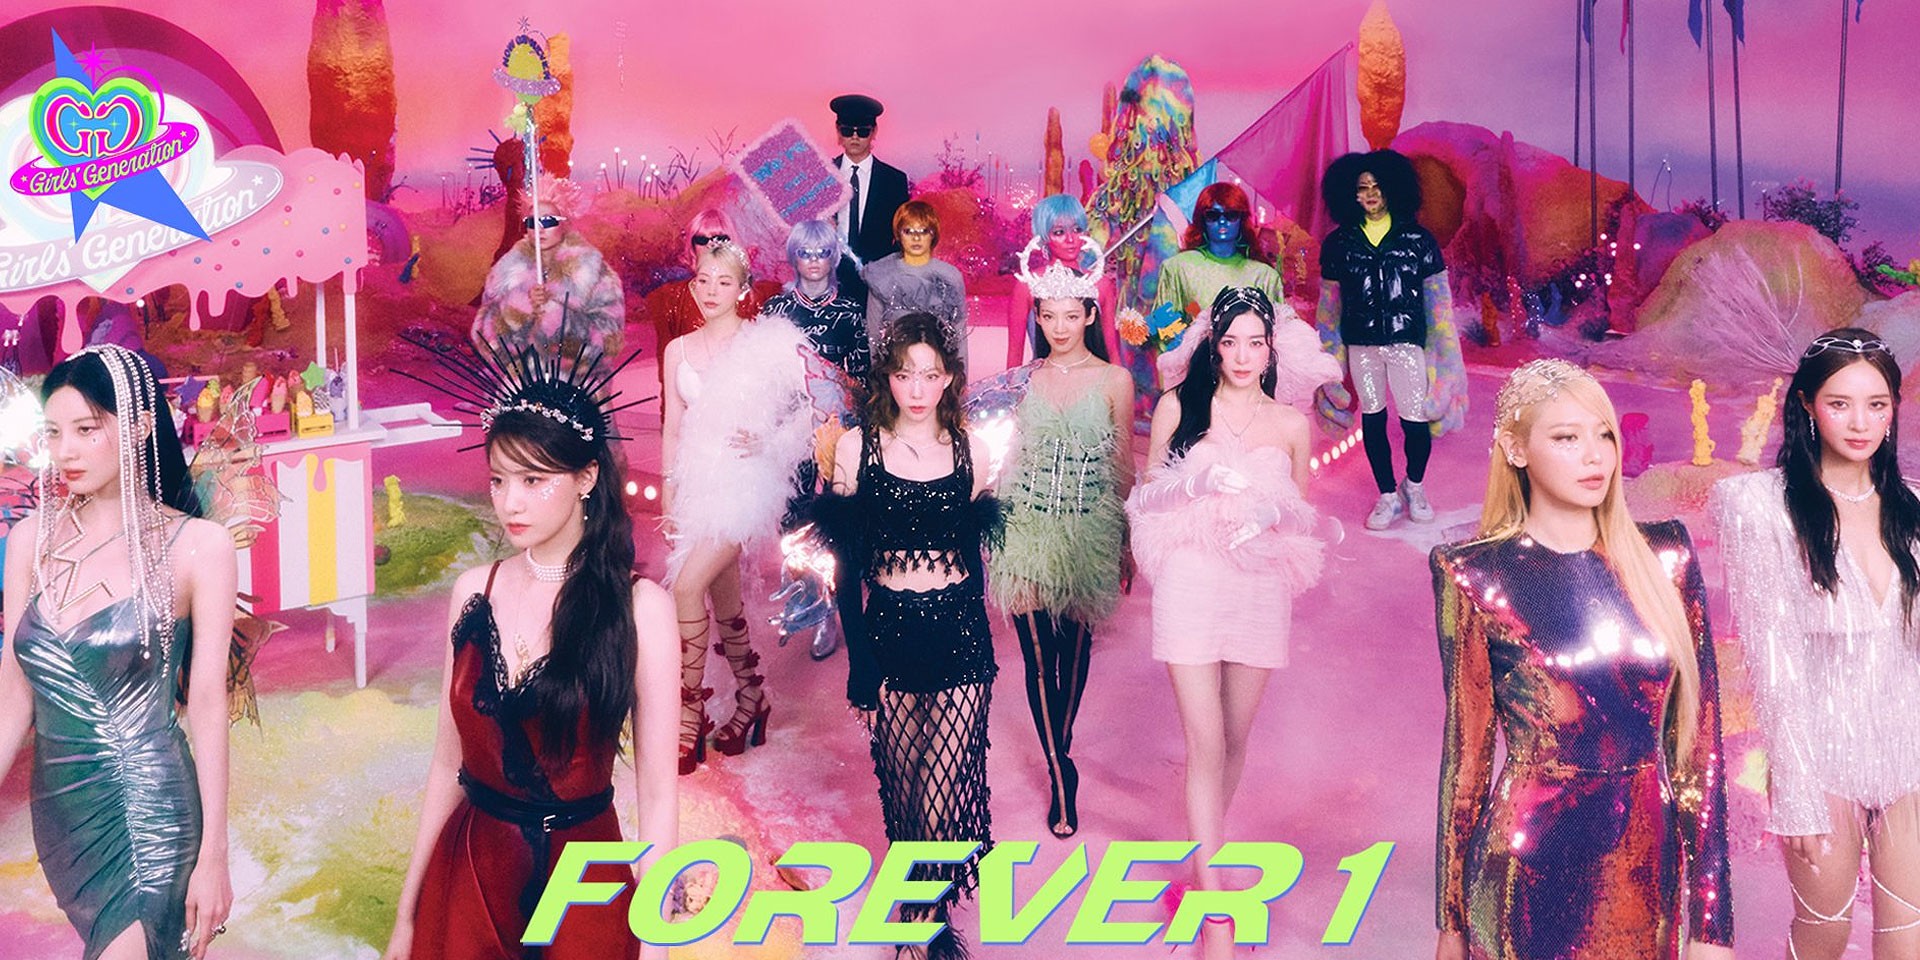 Girls' Generation return with new album 'FOREVER 1' in celebration of 15th anniversary – listen